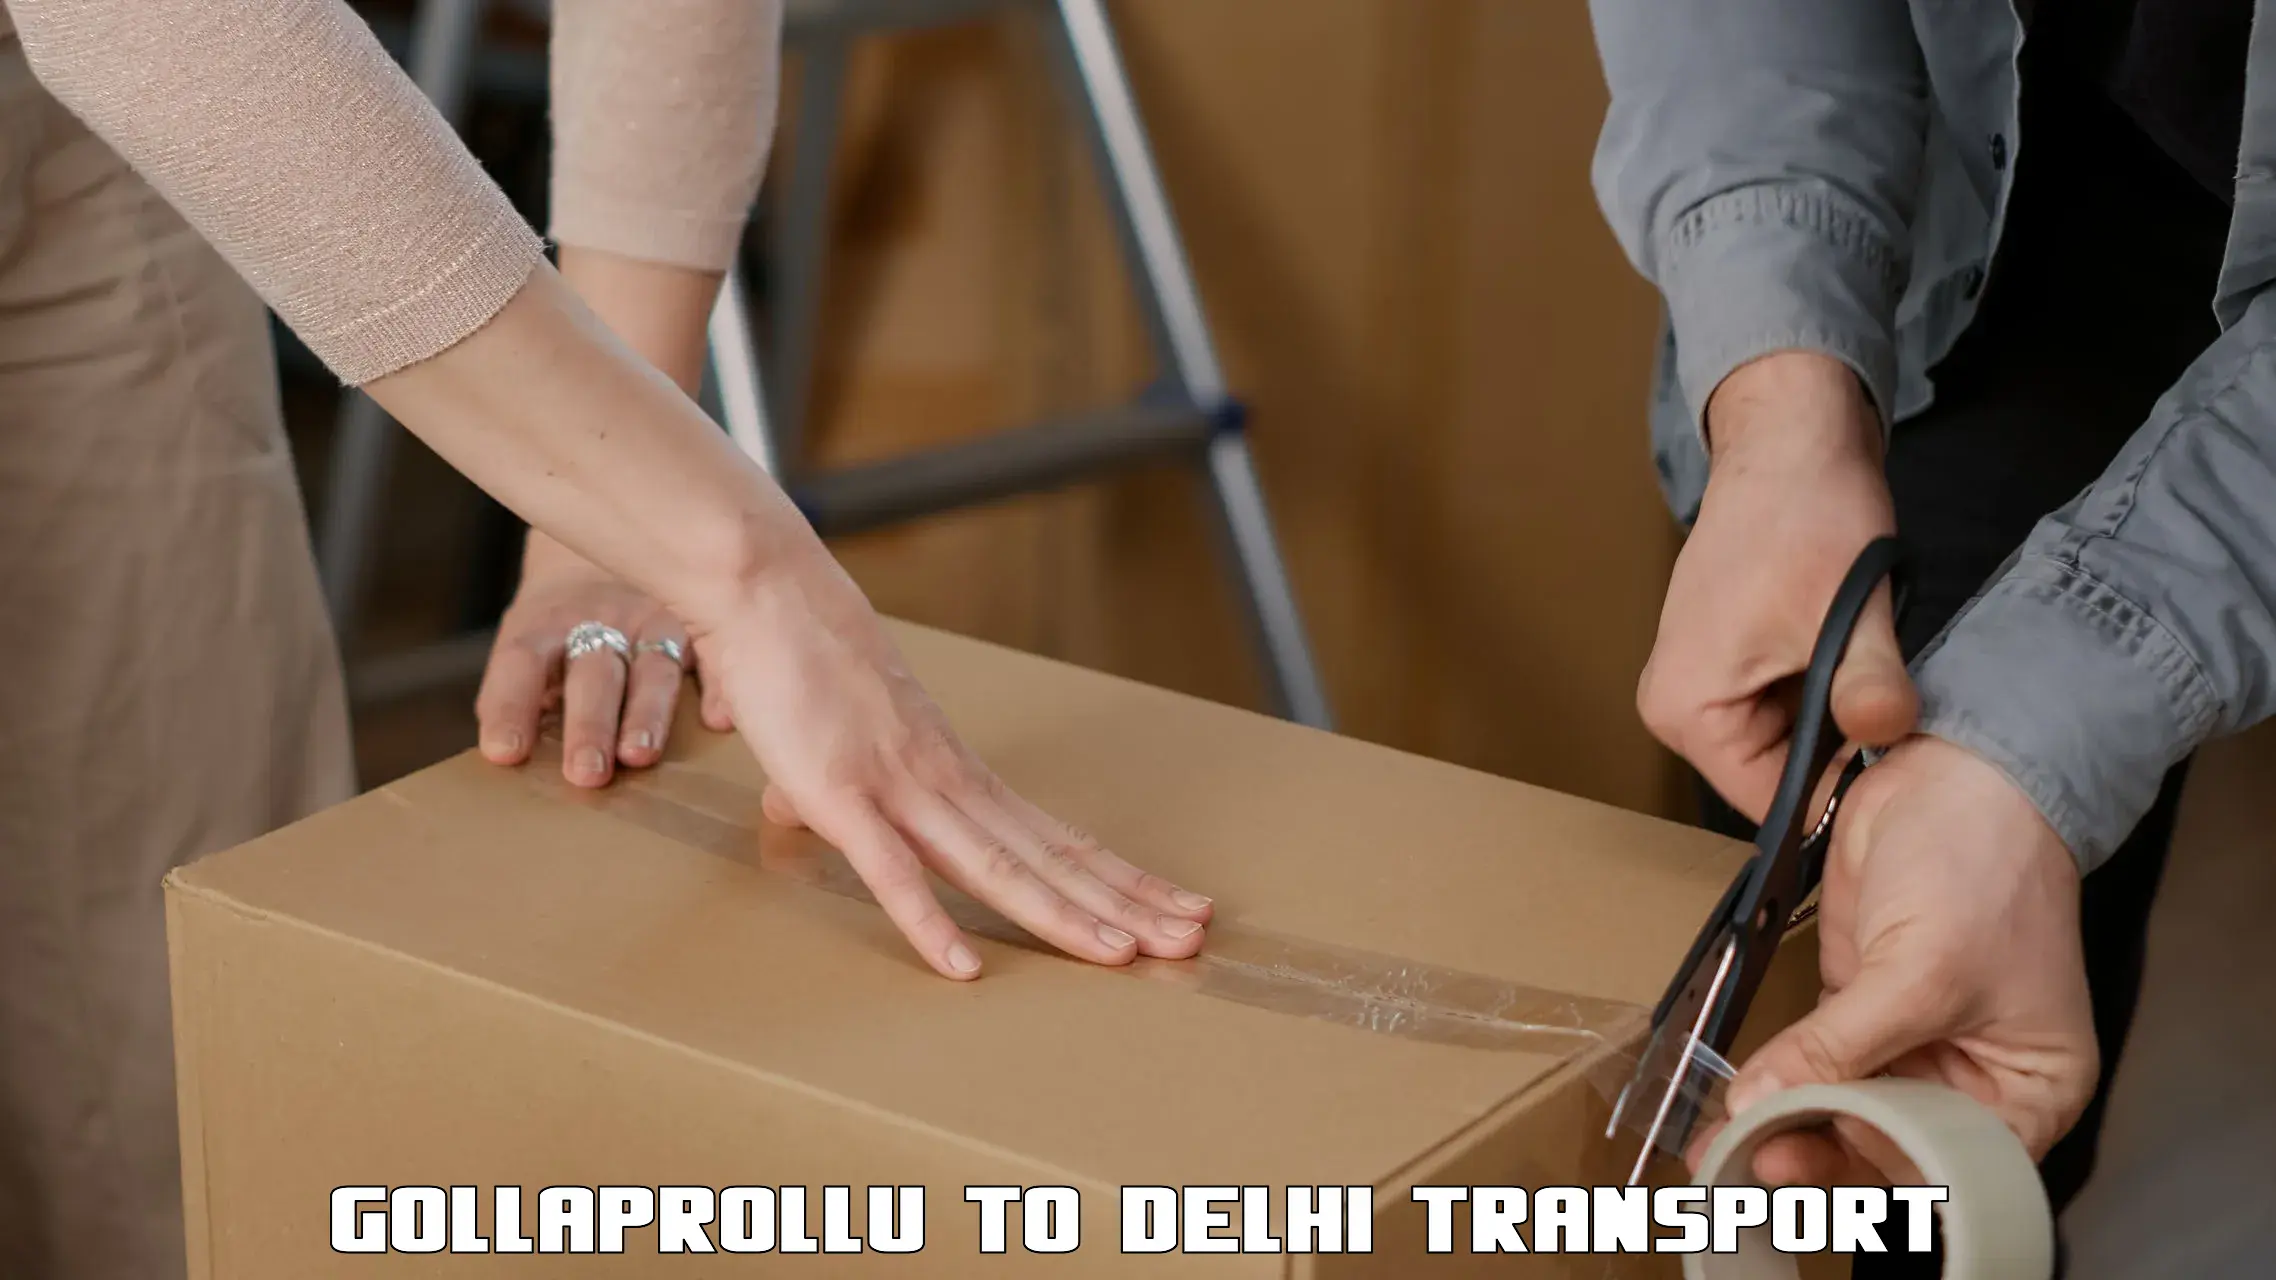 Daily transport service Gollaprollu to Jawaharlal Nehru University New Delhi